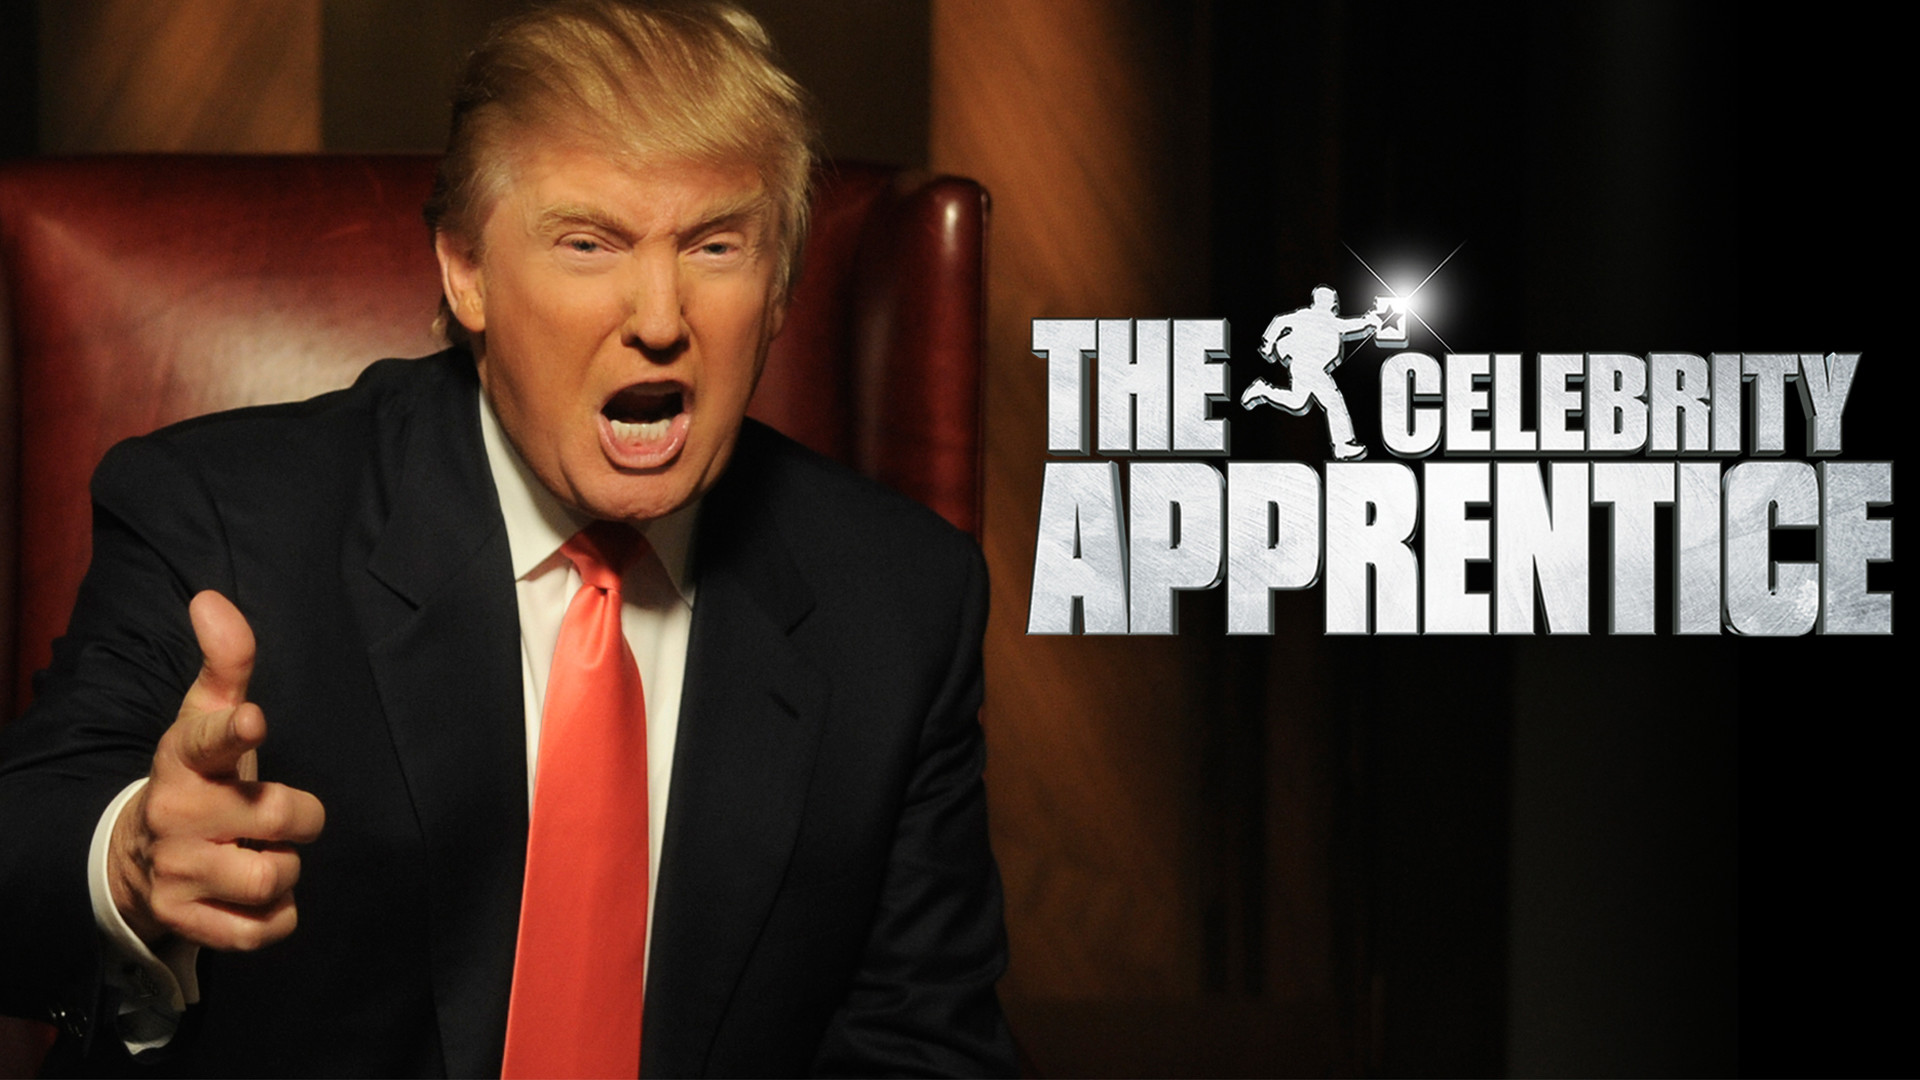 Donald Trump, The Celebrity Apprentice, The New Celebrity Apprentice, NBC